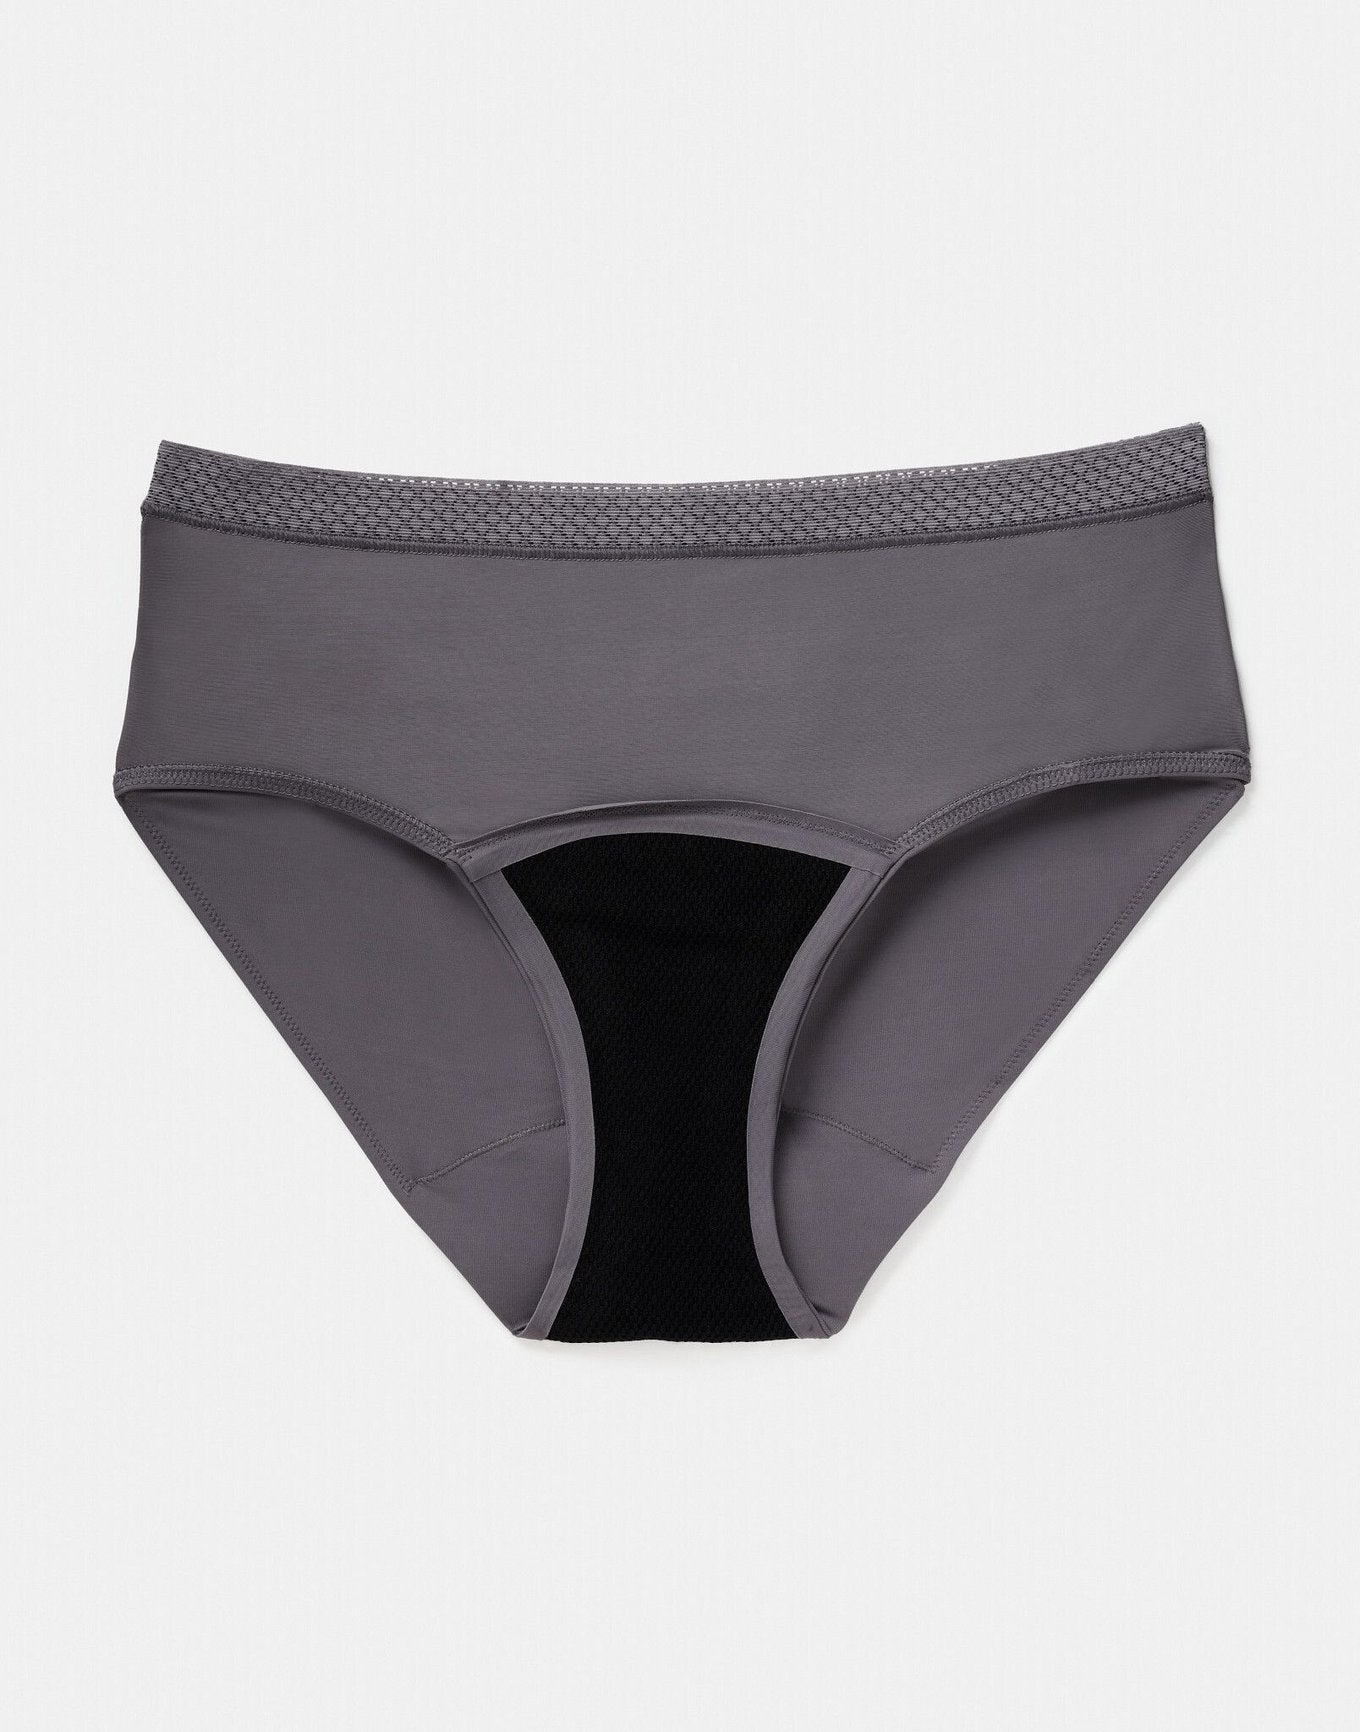 Thinx BTWN) Teen Period Underwear - Bikini Panties, Grey, 11/12 - Super  Absorbency